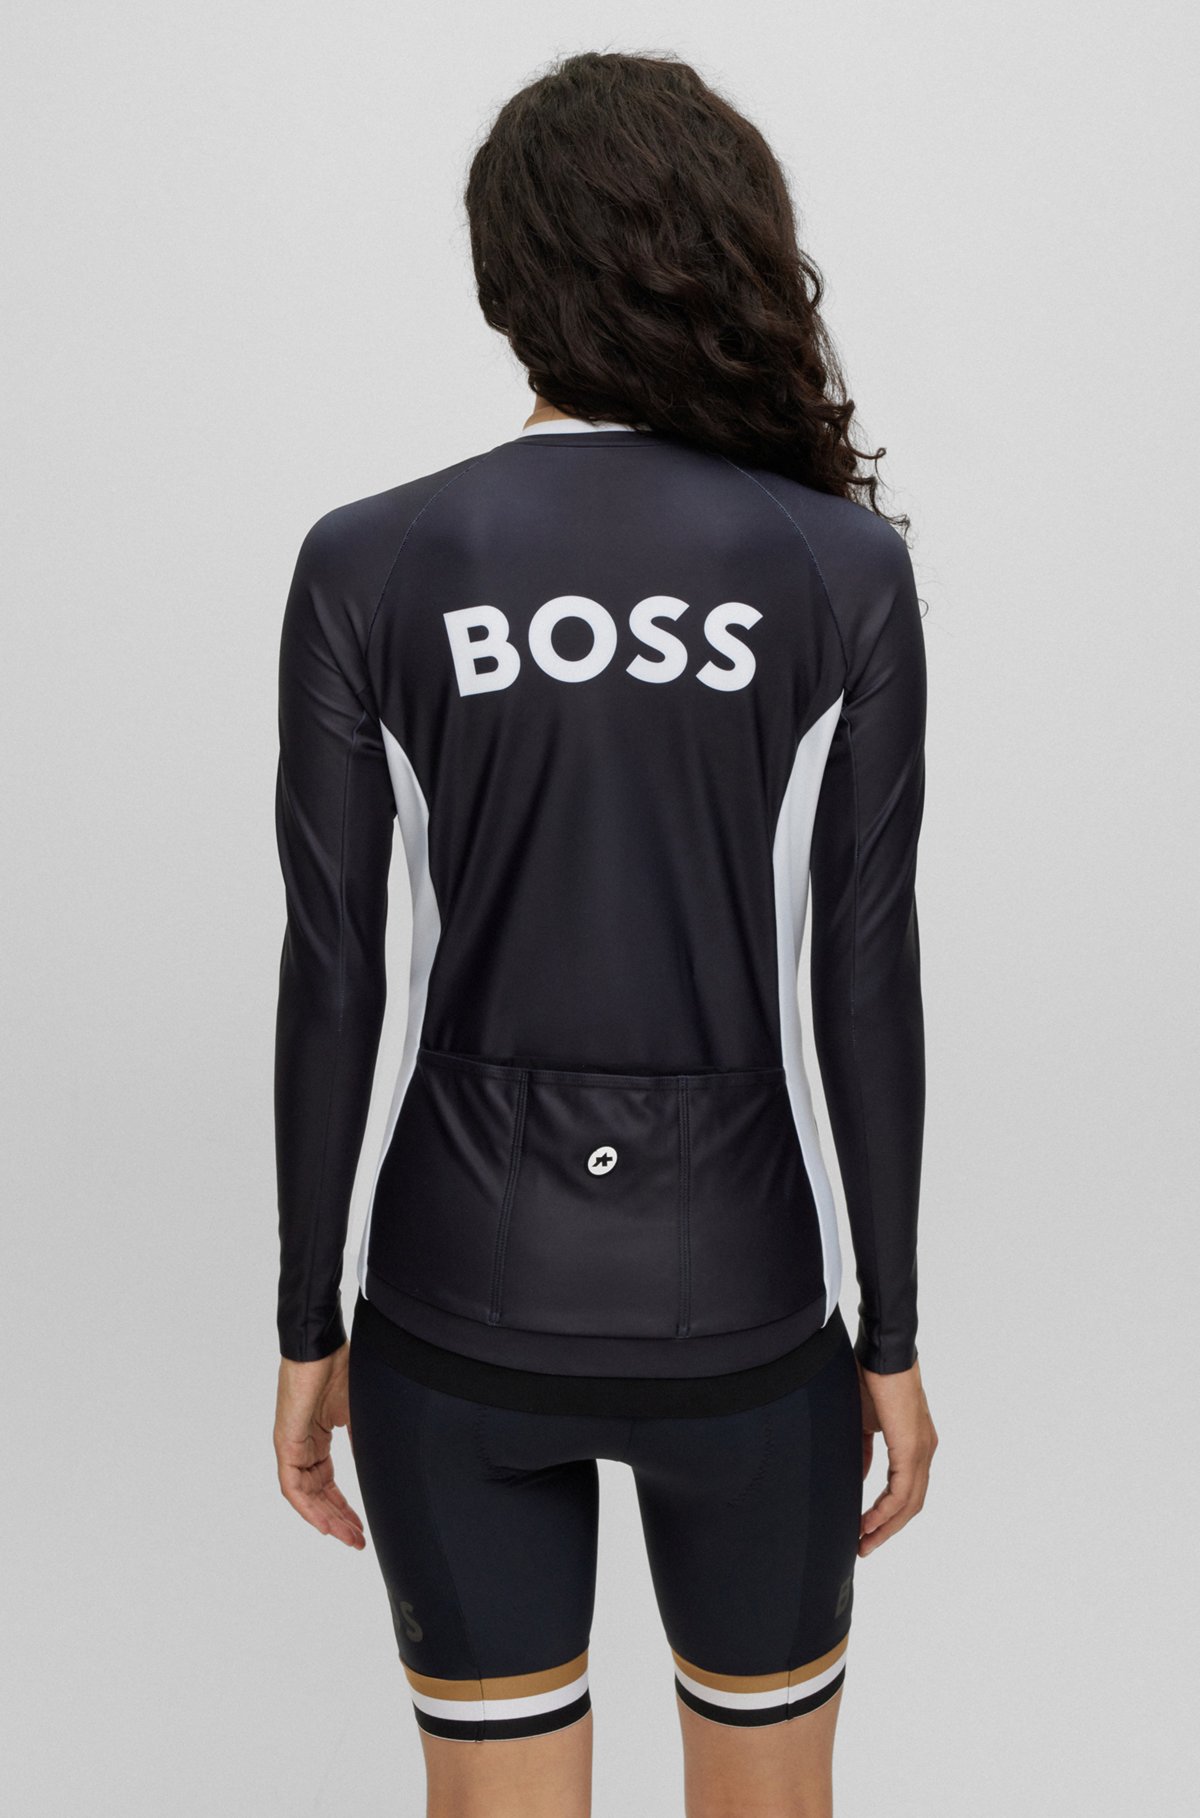 BOSS x ASSOS zip-up jersey top with three rear pockets, Black